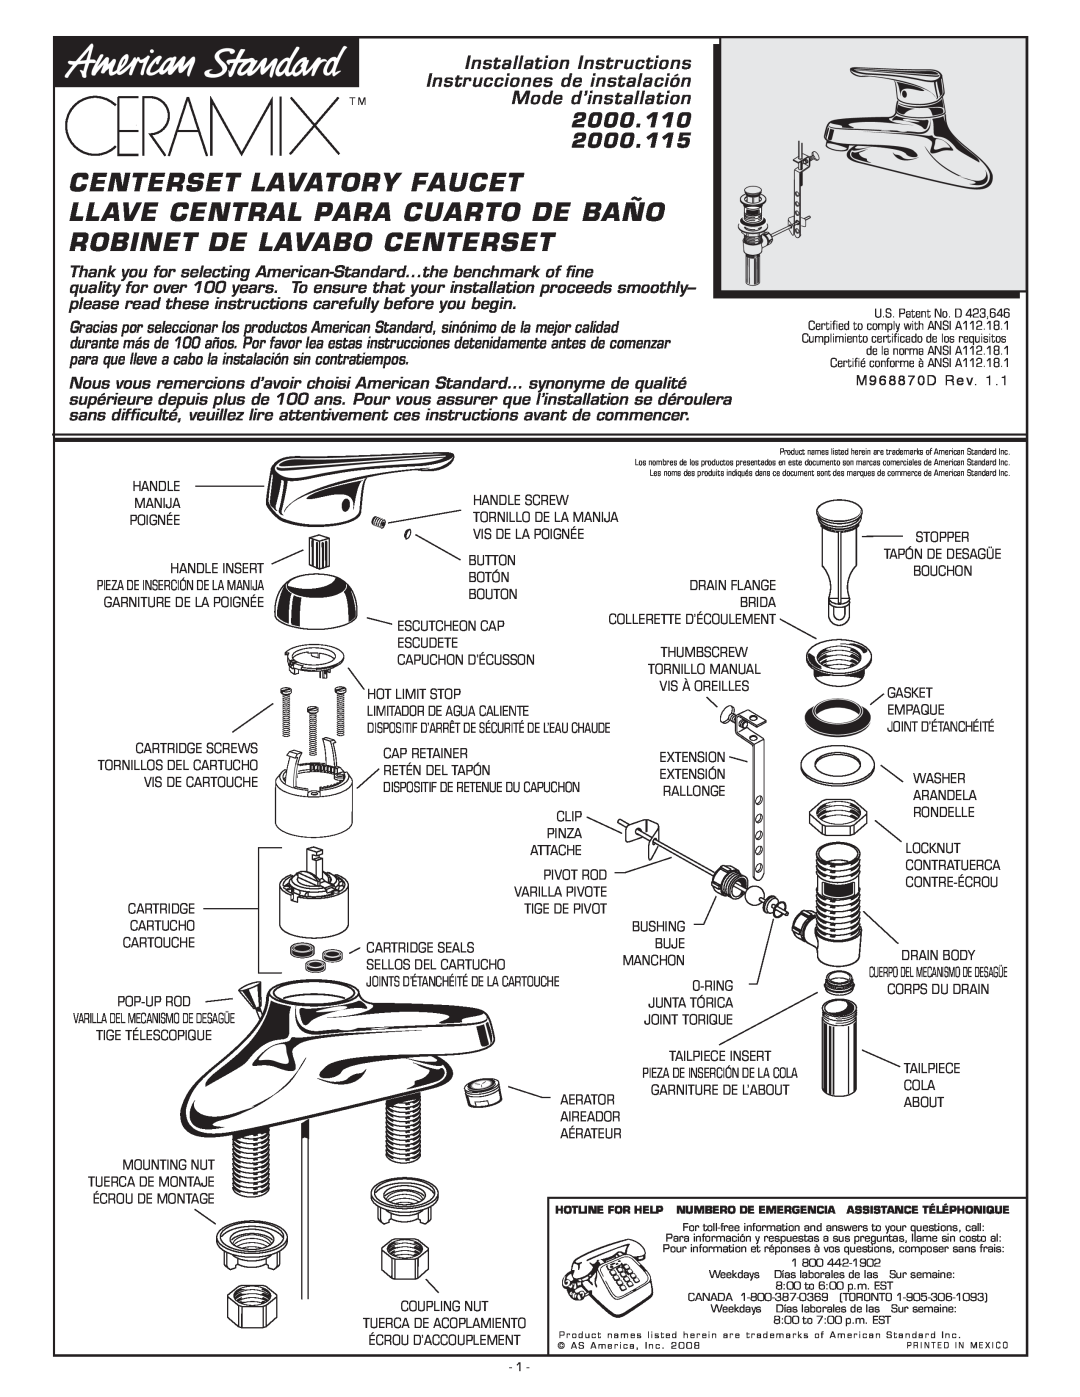 American Standard 2000.110 installation instructions Centerset Lavatory Faucet, 2000.115, Installation Instructions 